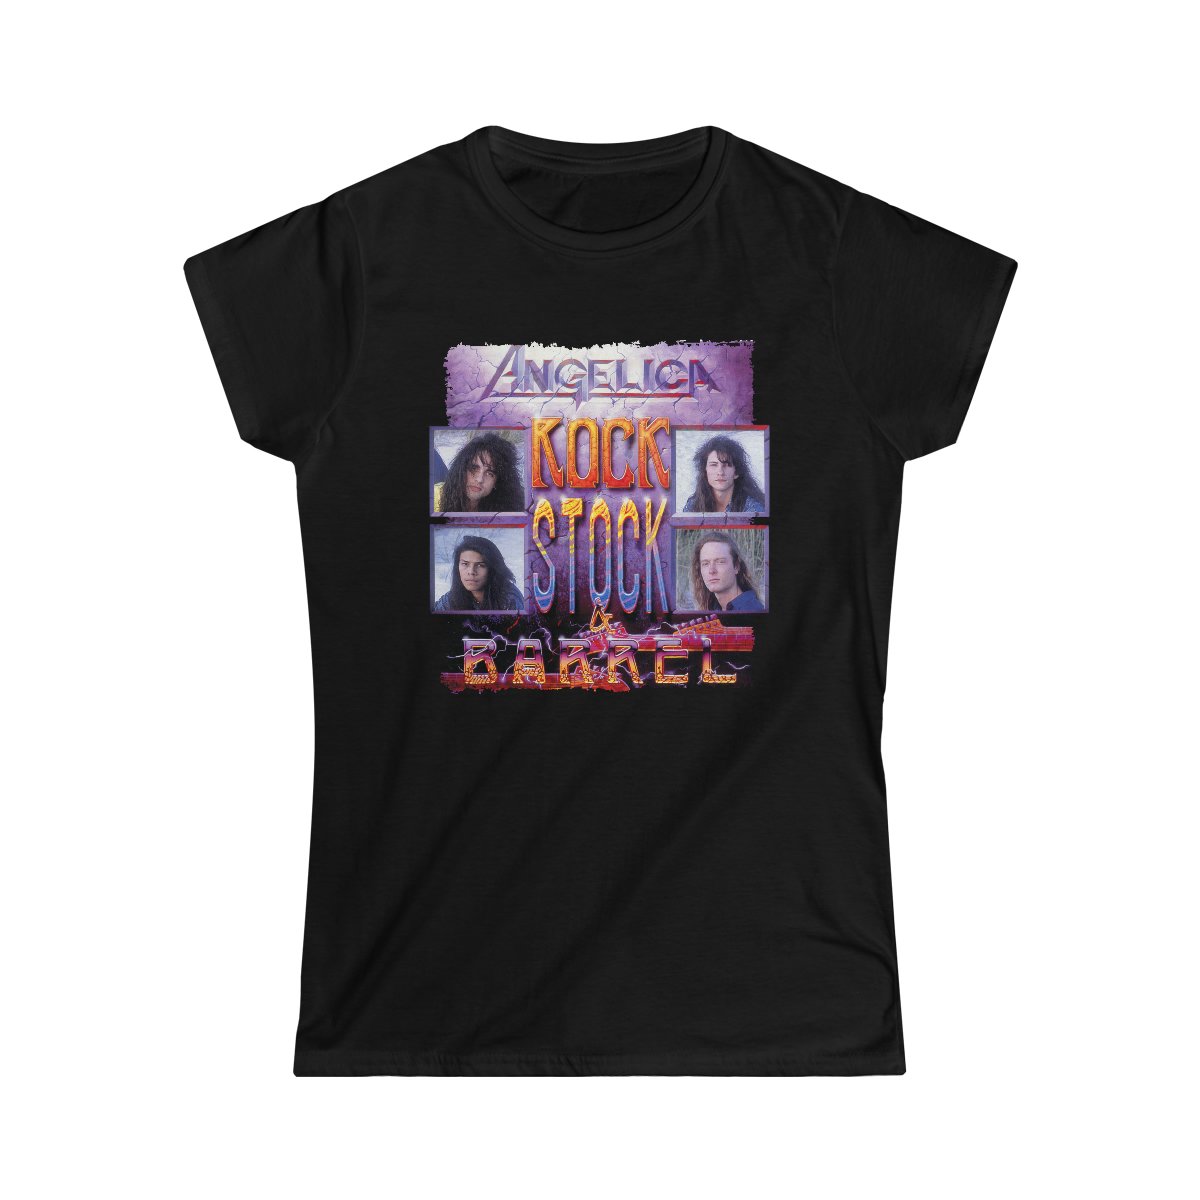 Angelica – Rock Stock & Barrel Women’s Short Sleeve Tshirt 64L